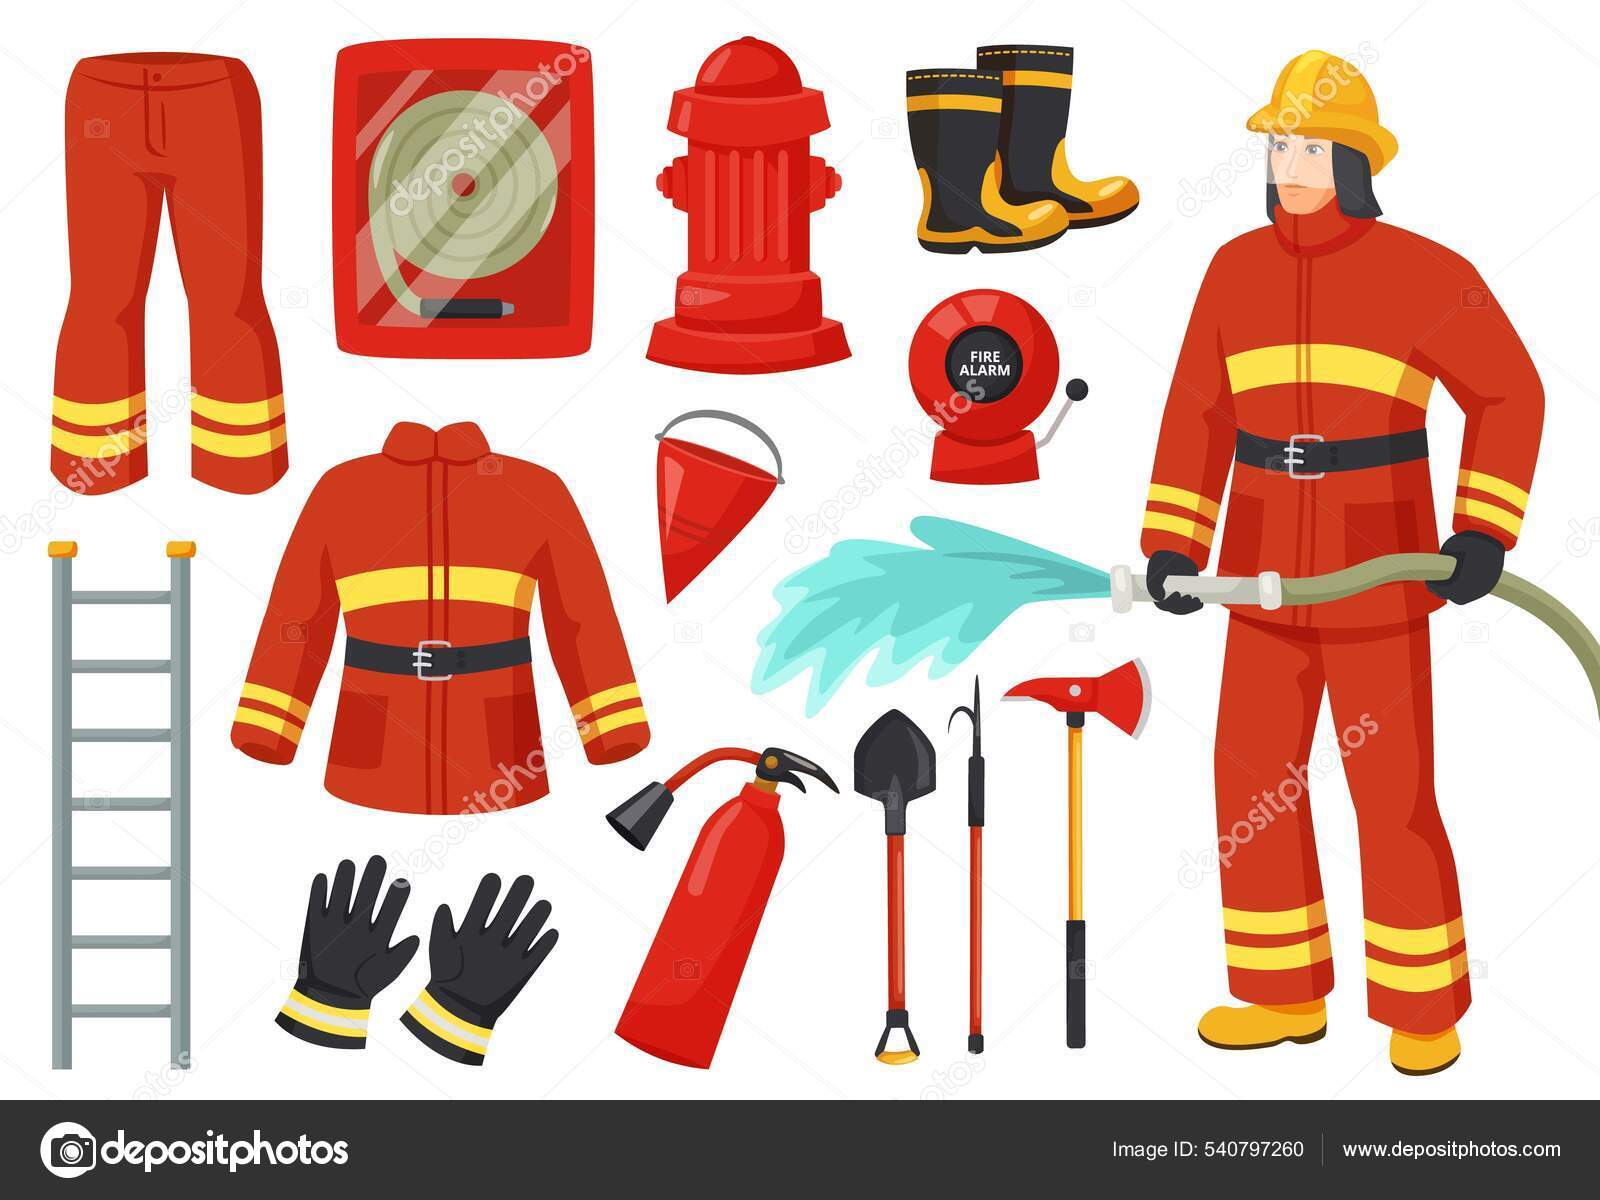 https://st.depositphotos.com/3495567/54079/v/1600/depositphotos_540797260-stock-illustration-cartoon-firefighter-character-with-fire.jpg